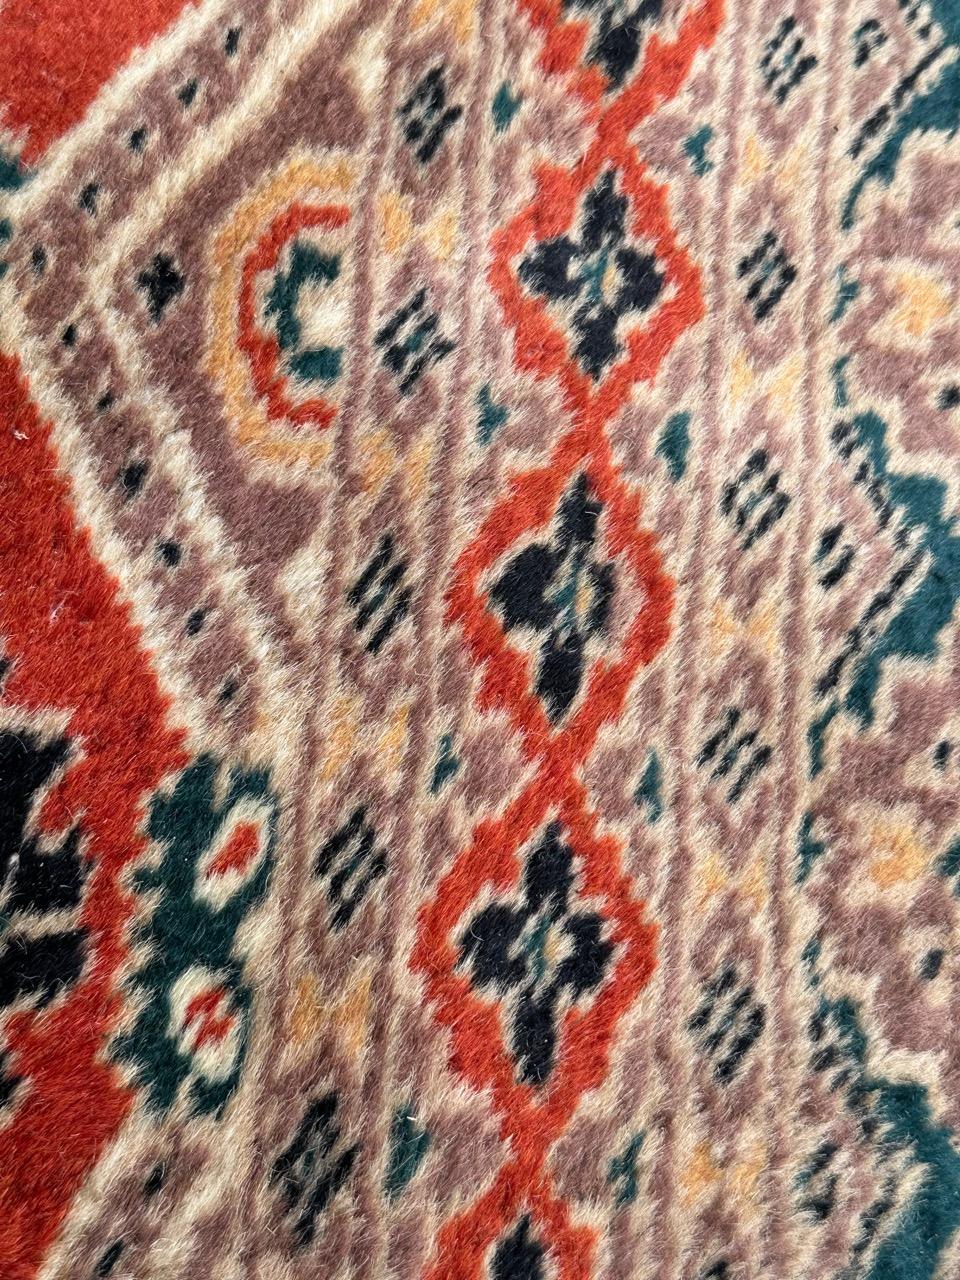 Tribal pretty small vintage Pakistani rug For Sale